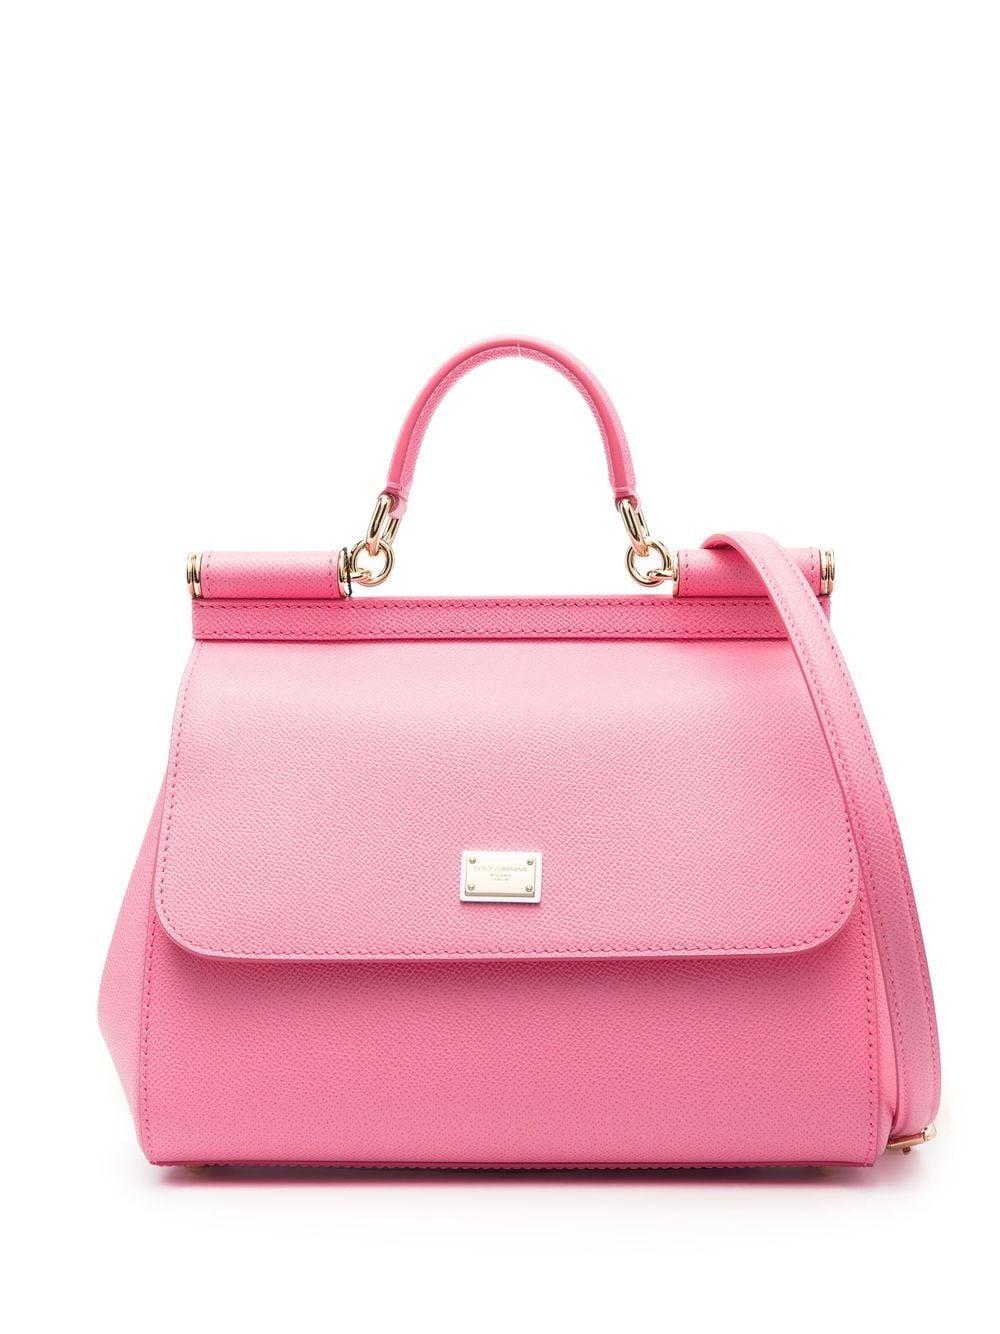 Dolce & Gabbana Pink Large Leather Sicily Bag